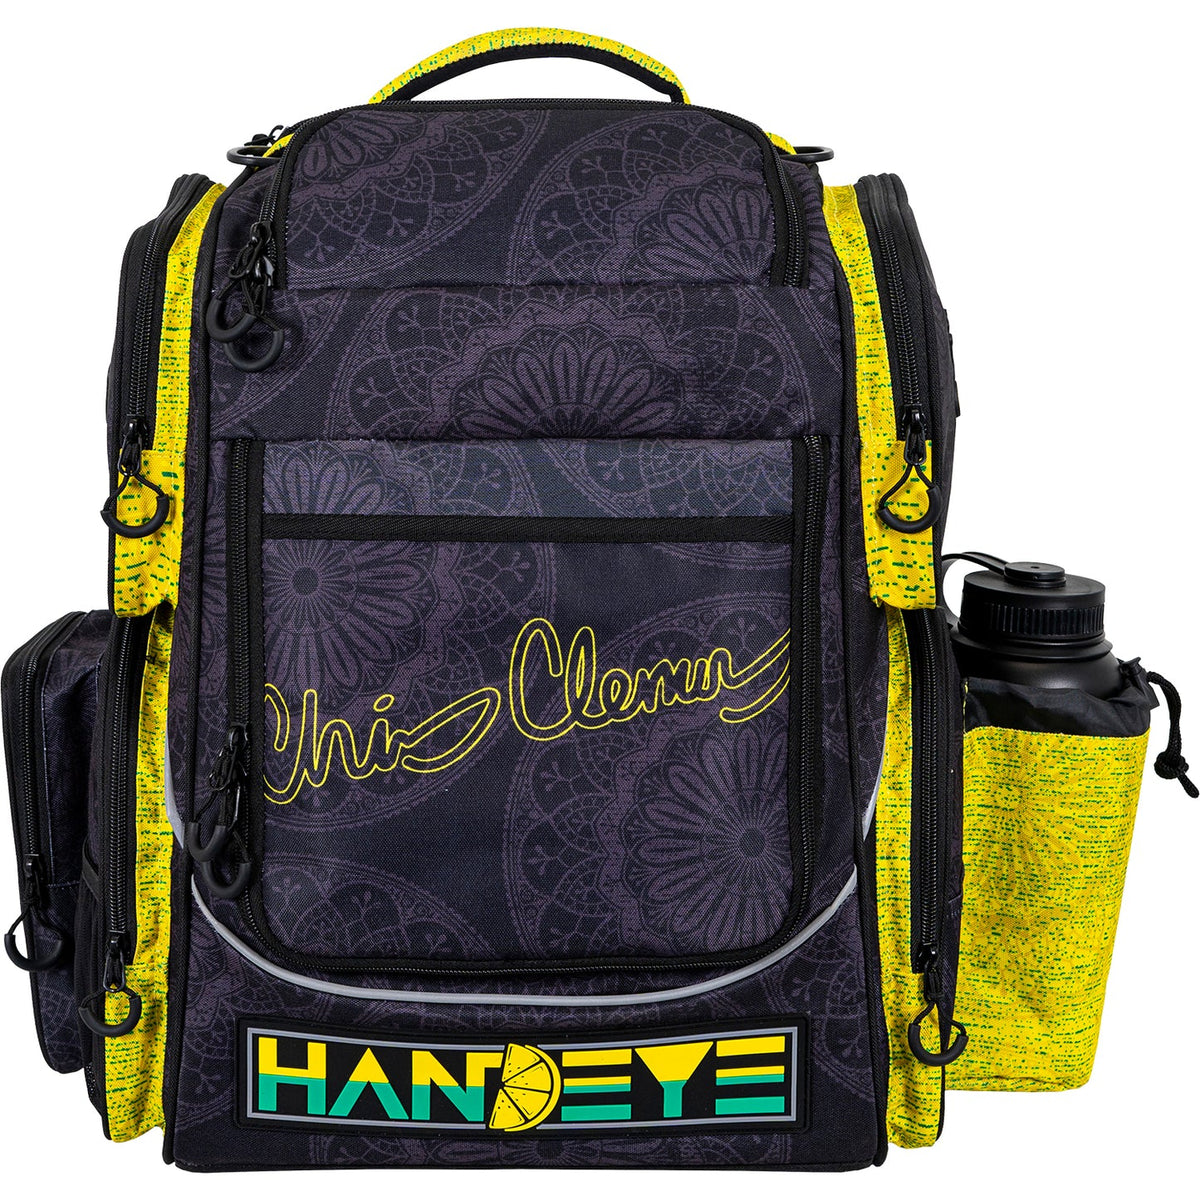 Handeye Supply Co Mission Rig Backpack - Chris Clemons